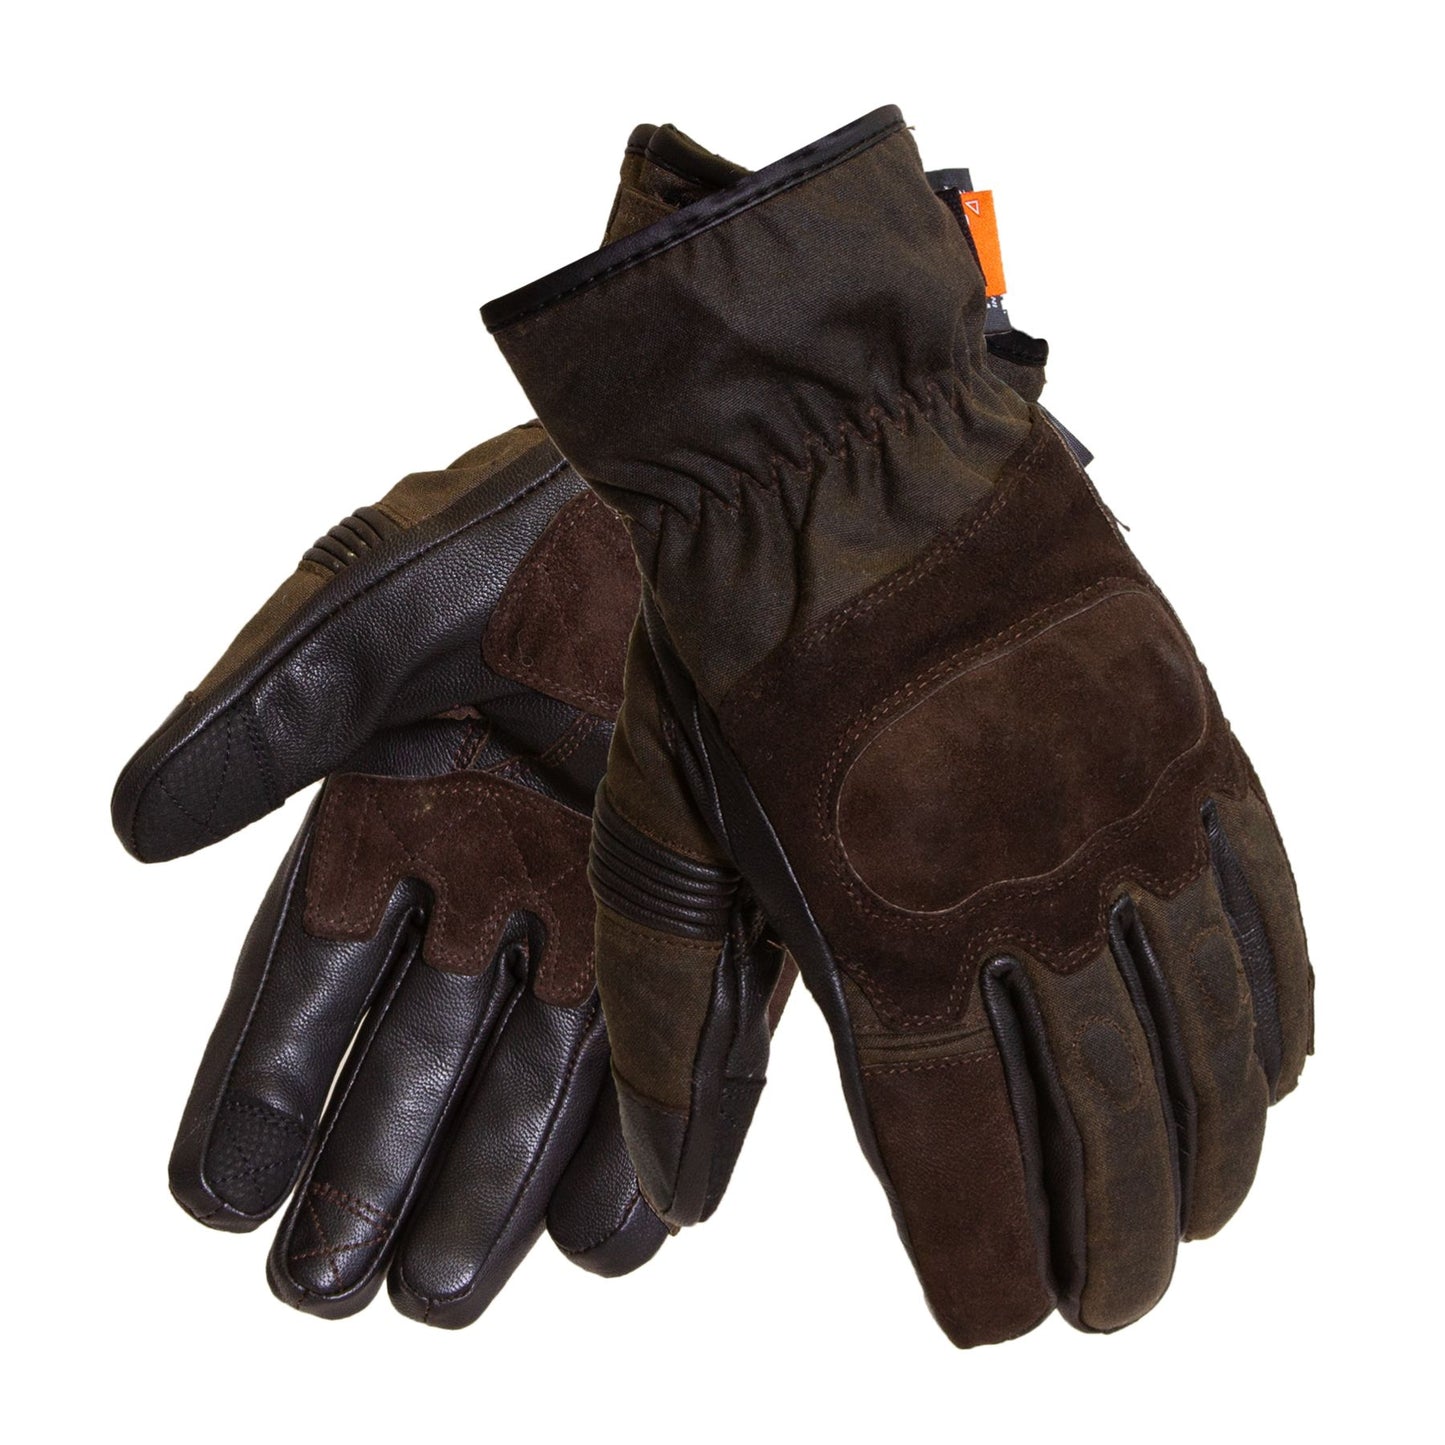 MERLIN Ranton 2 D30 WP Glove